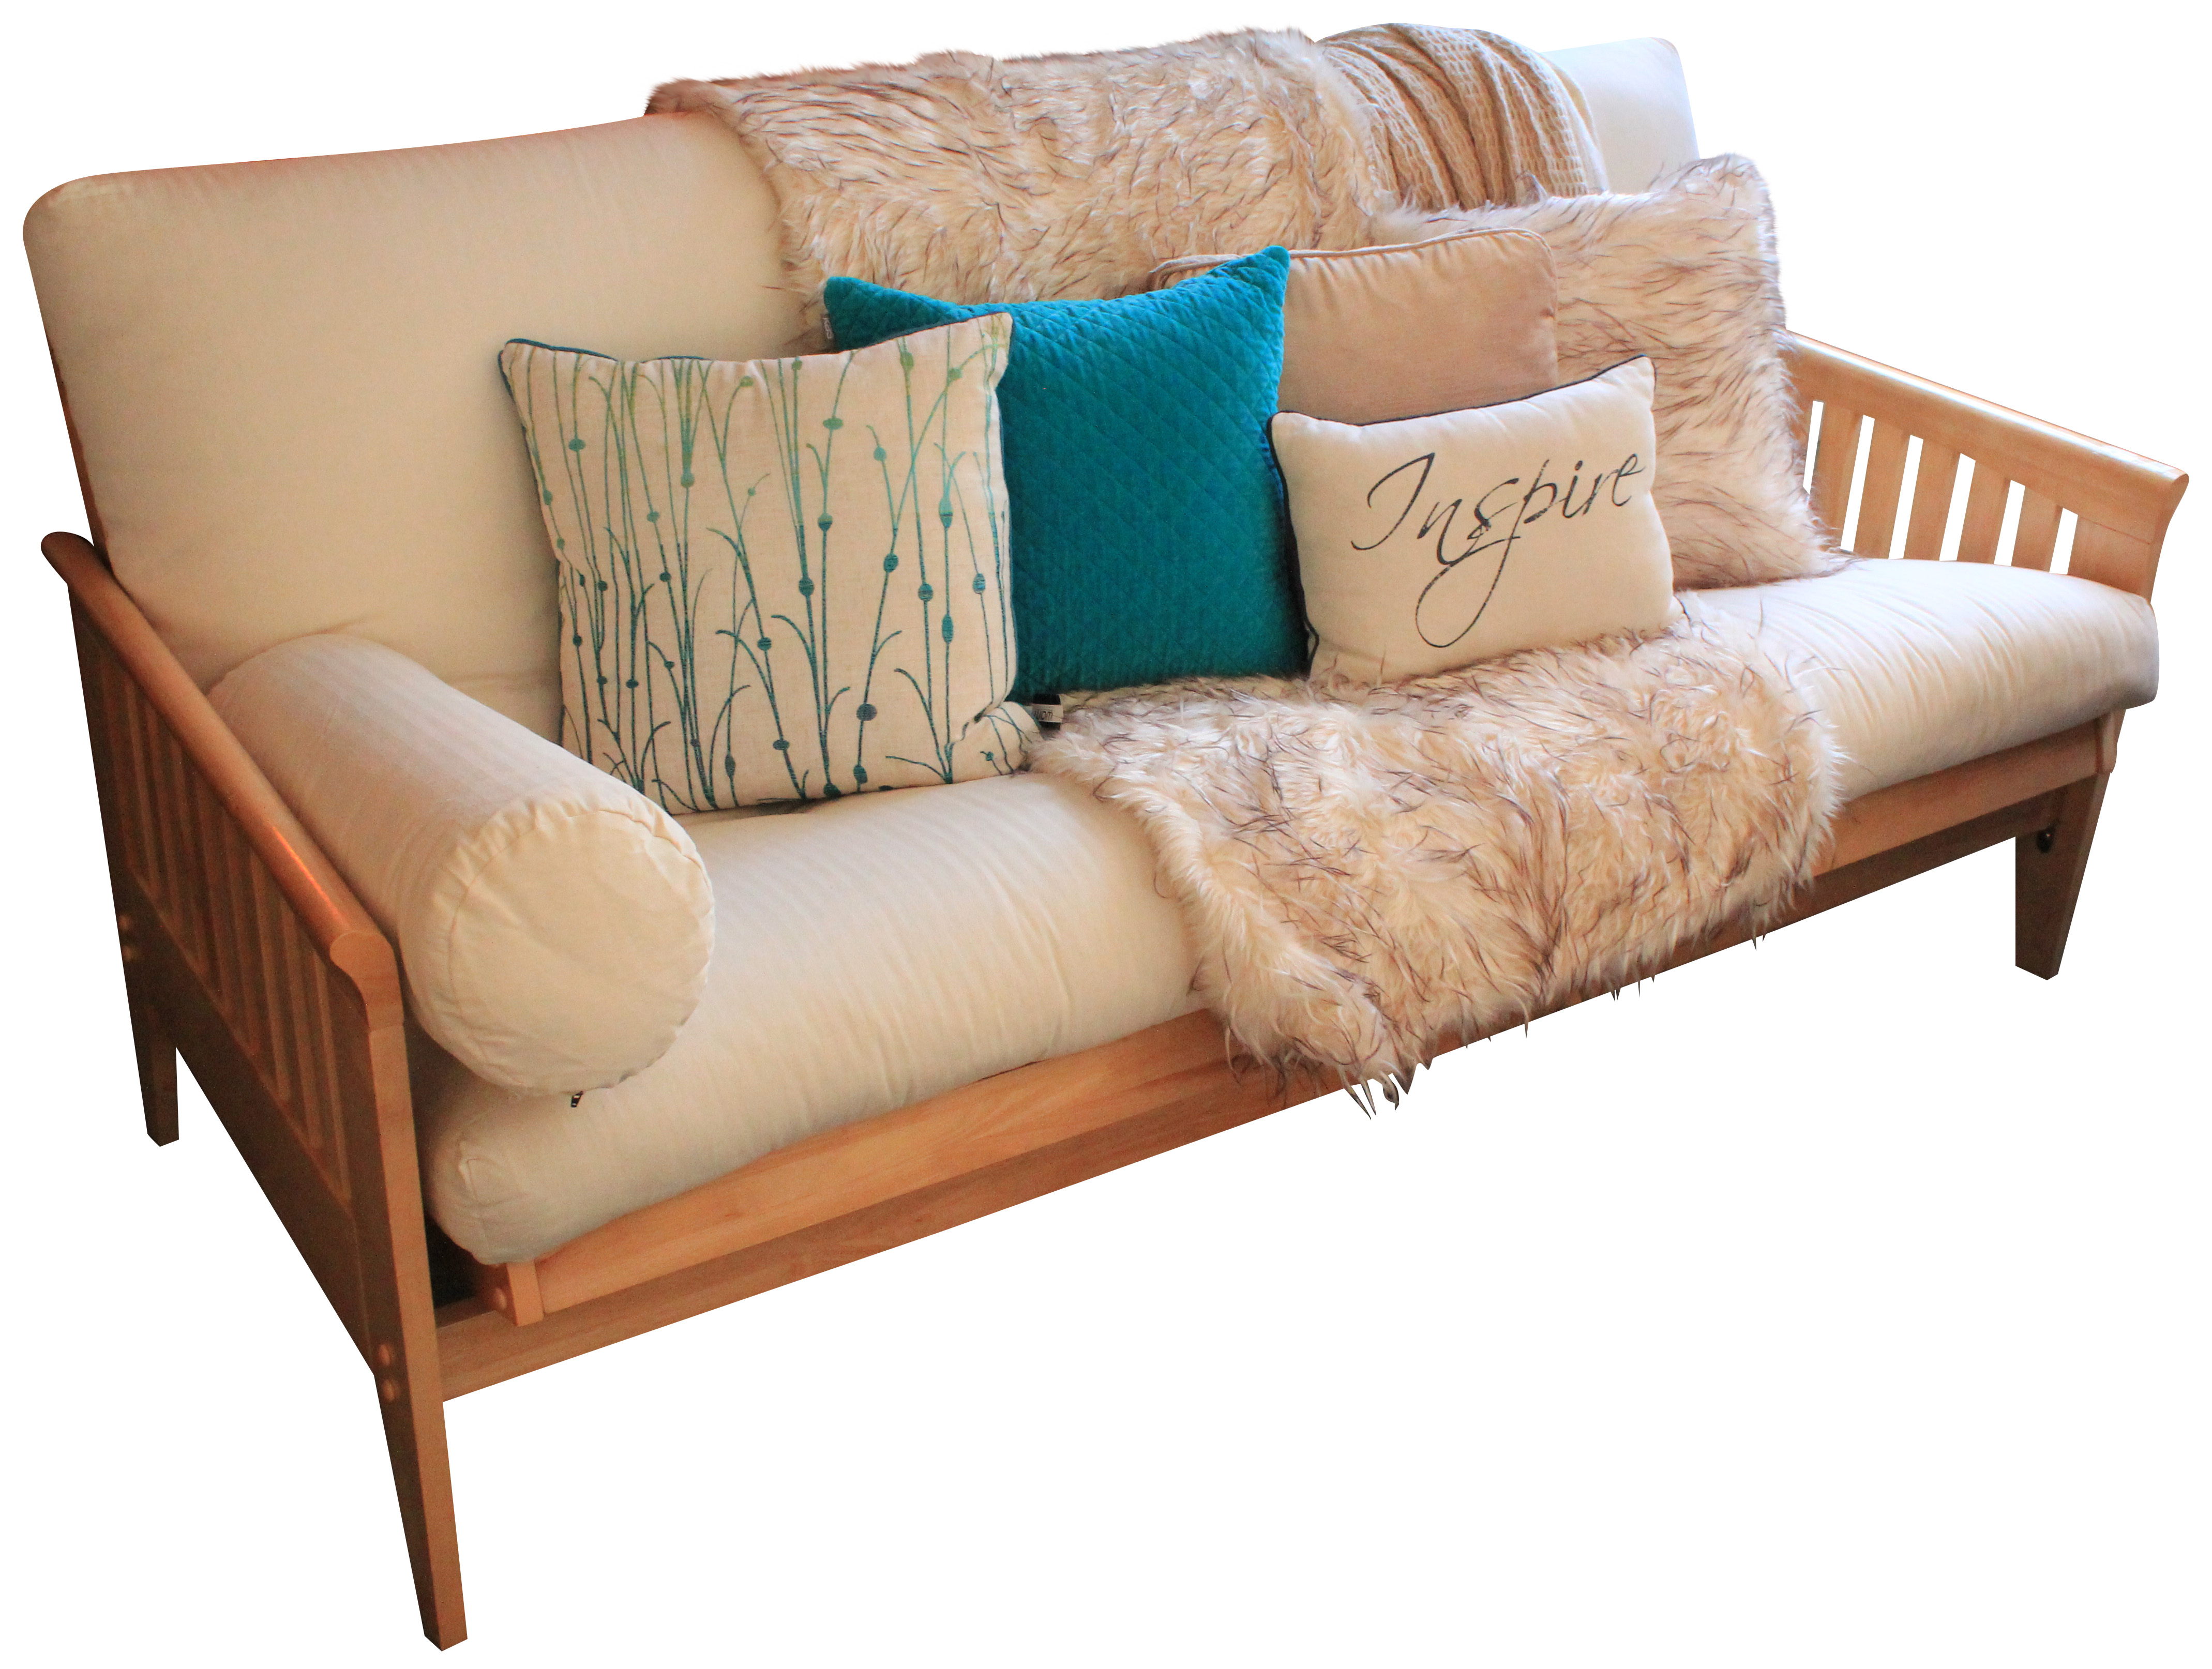 double futon sofa bed base